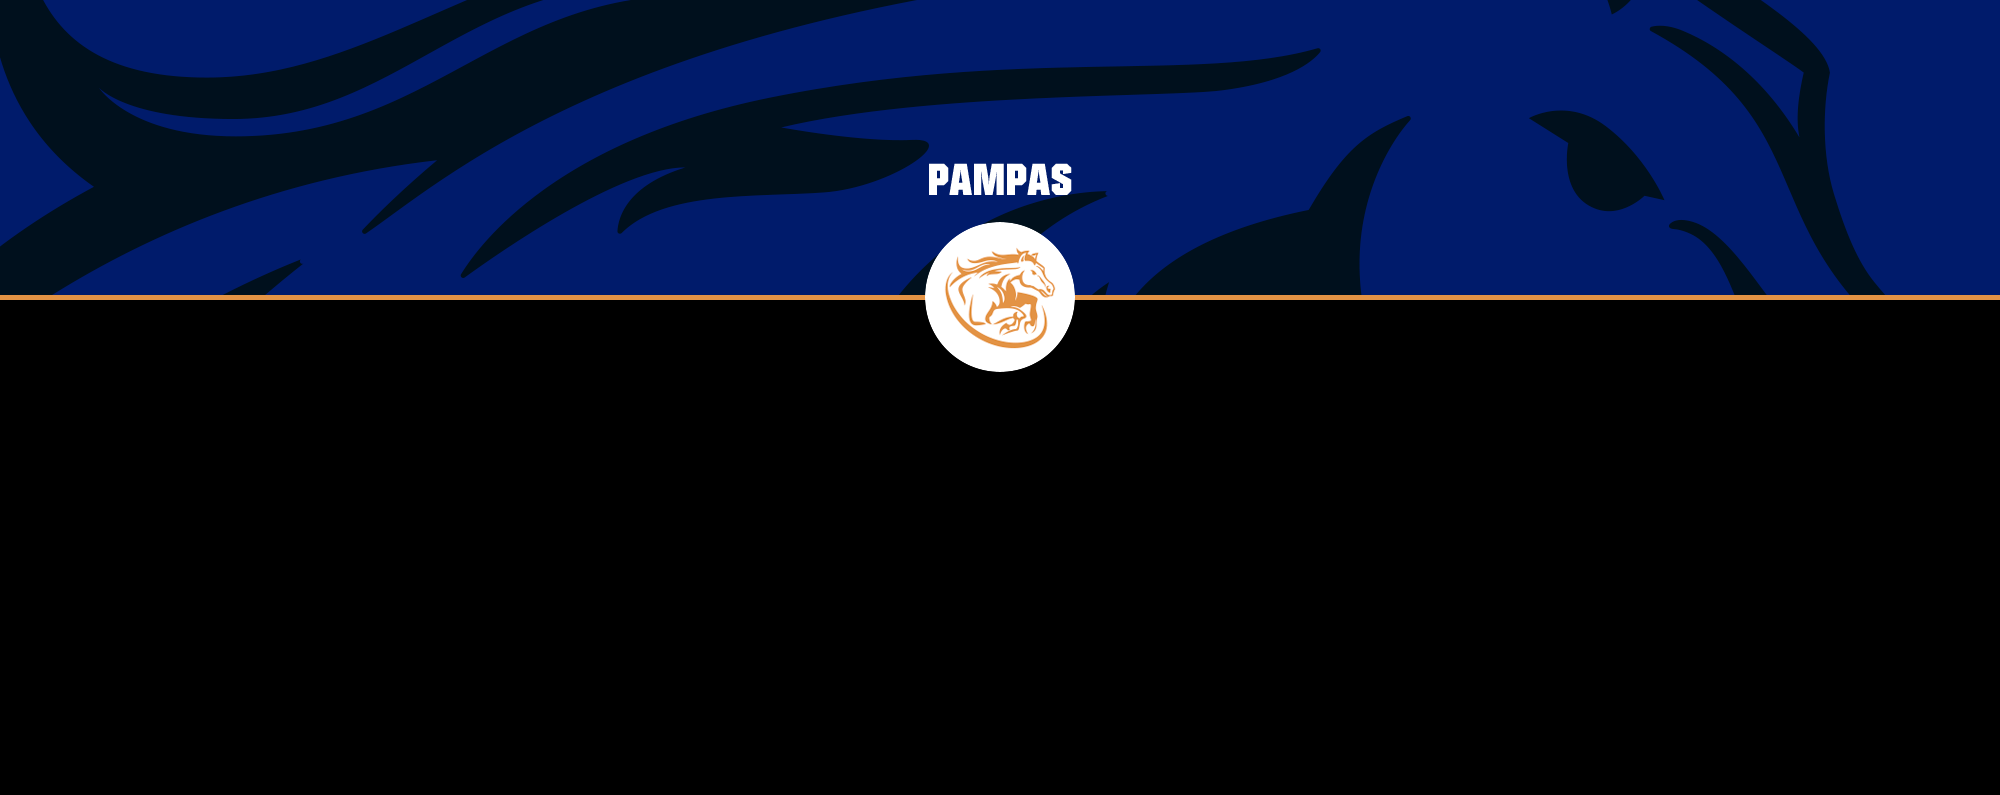 Pampas banner